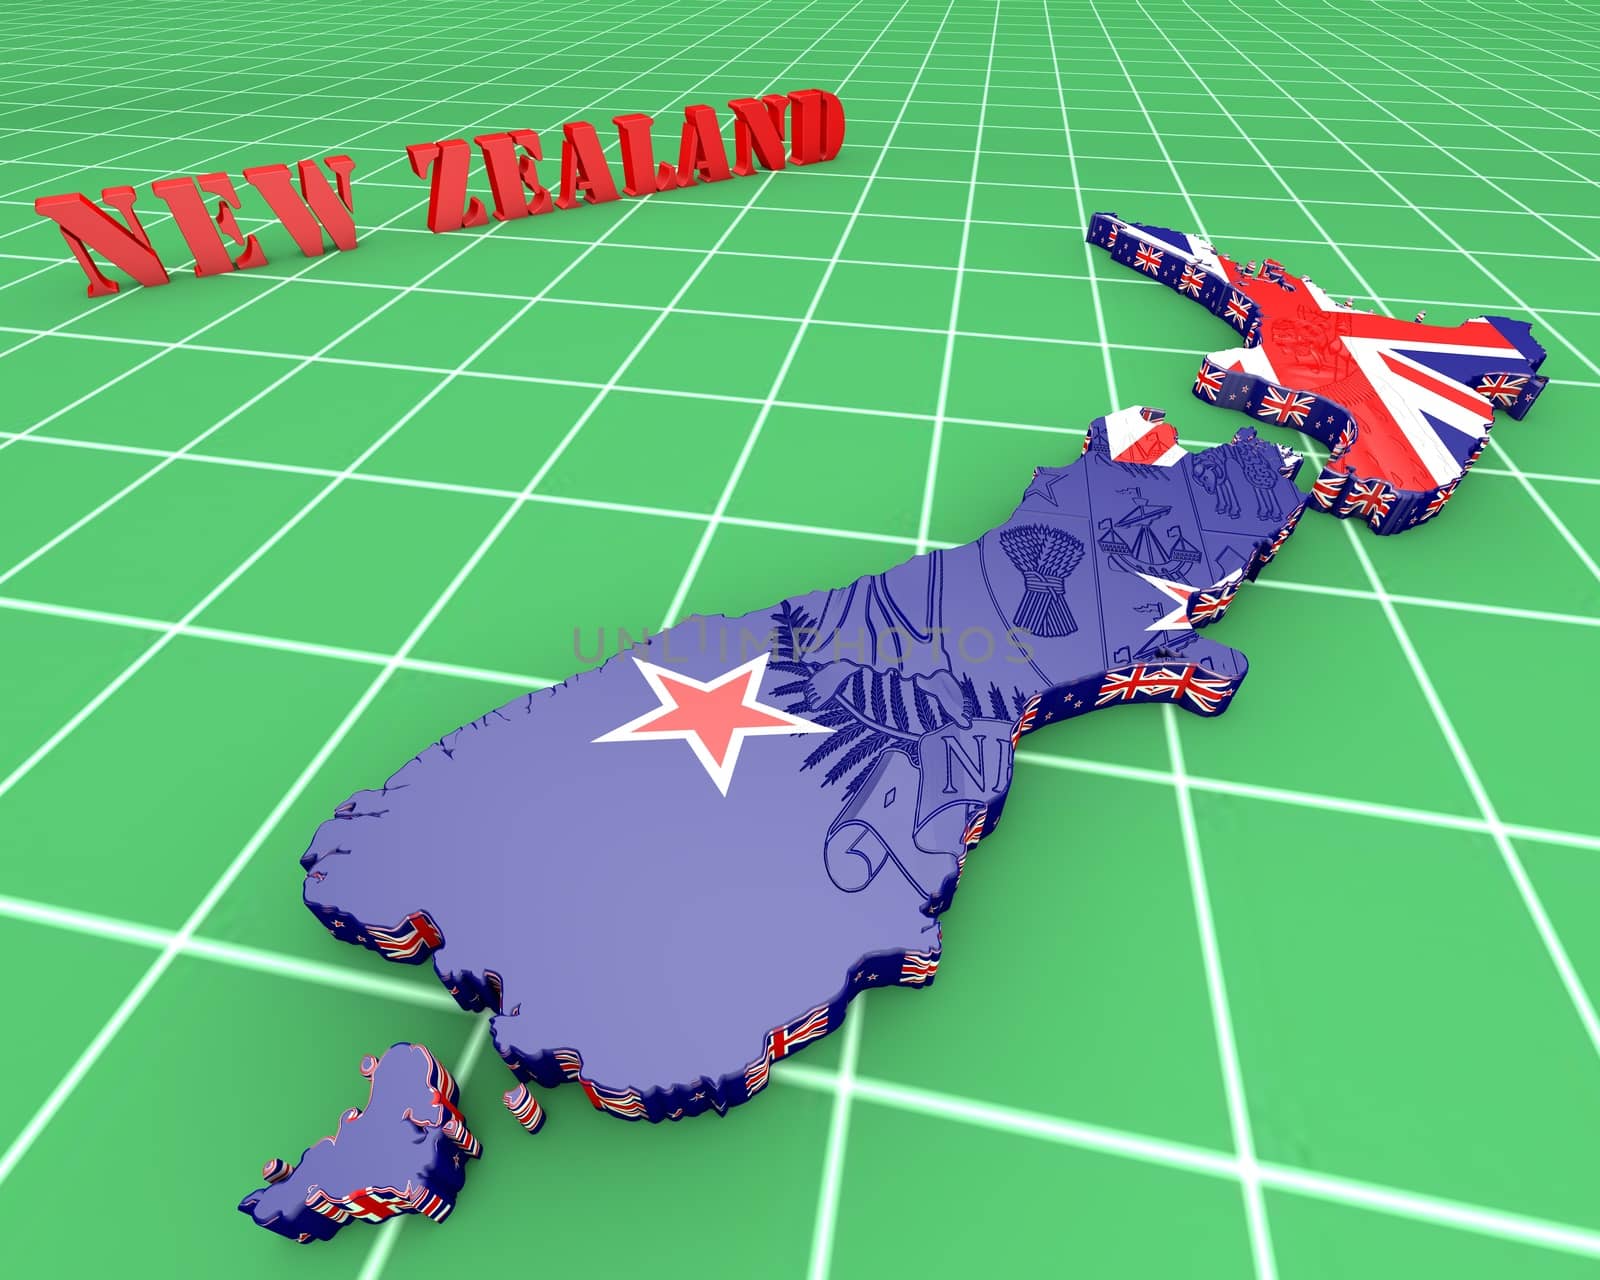 Map illustration of New Zealand by dolfinvik